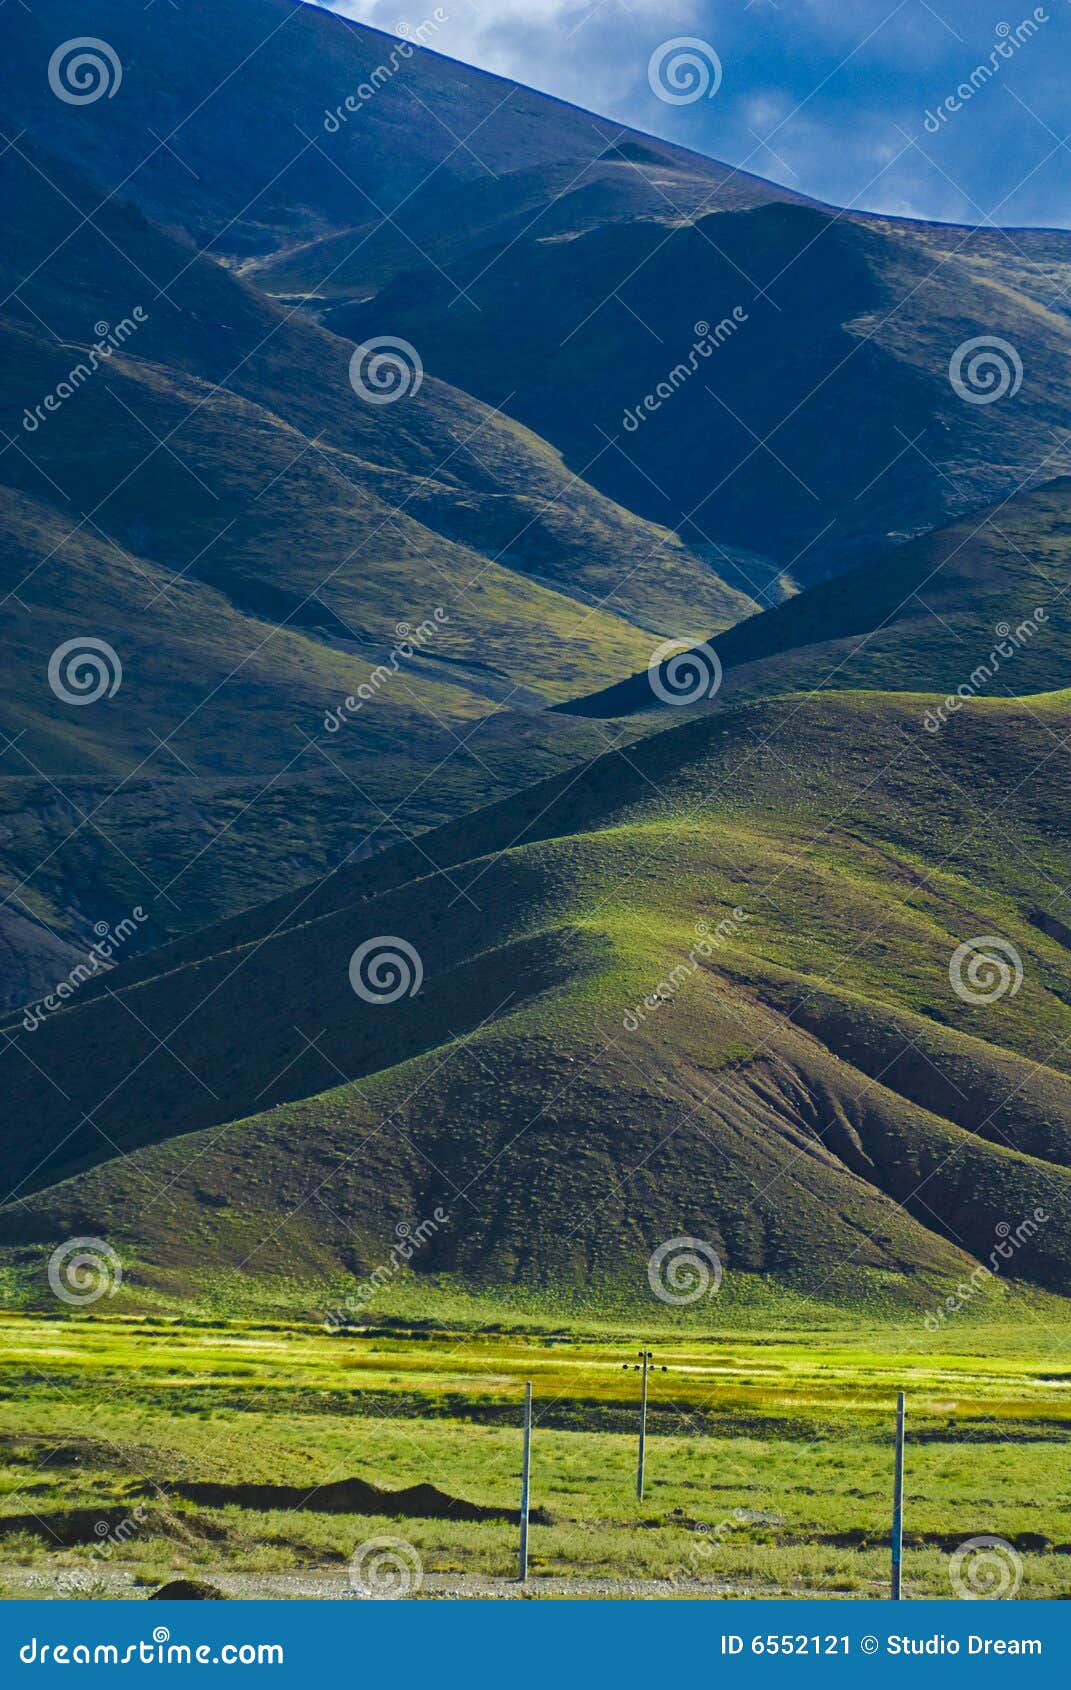 mountainous tibetan landscape